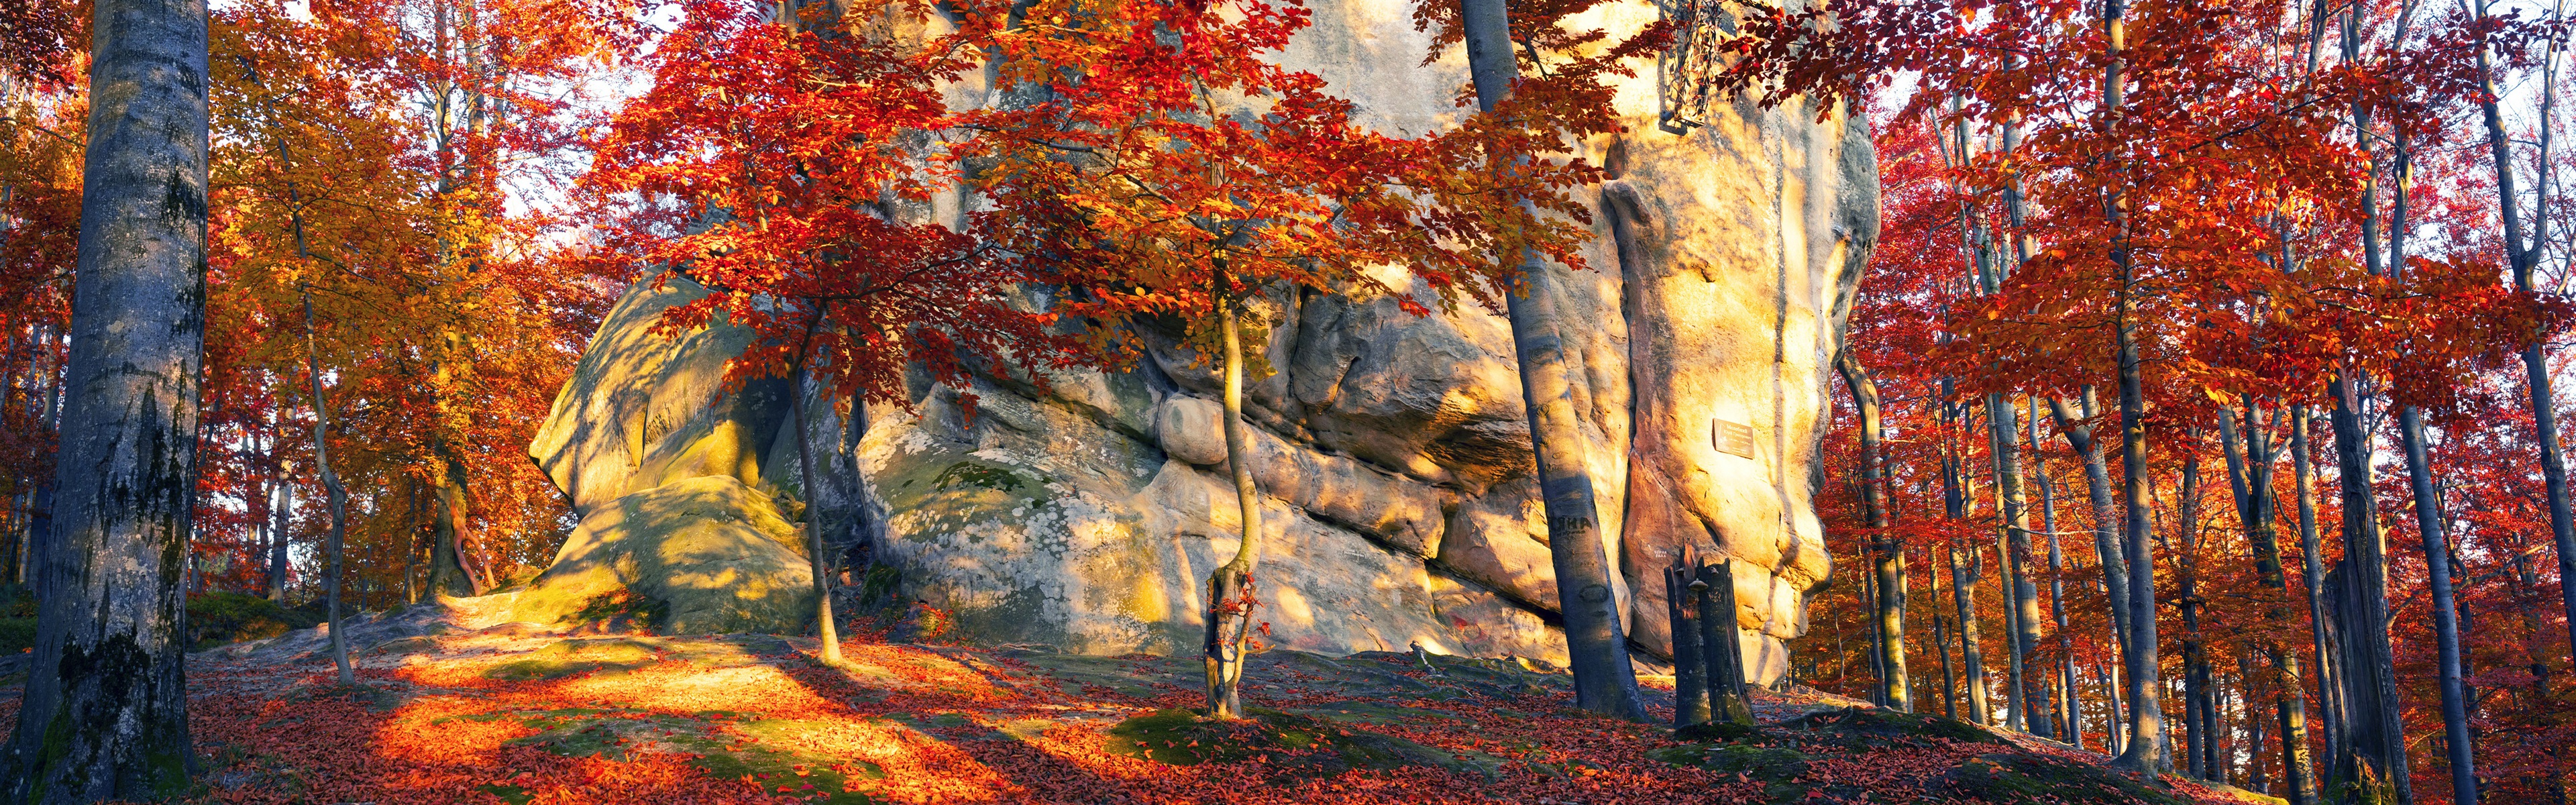 Wallpaper Ukraine, stones, trees, red leaves, autumn, sun rays 3840x2160 UHD 4K Picture, Image